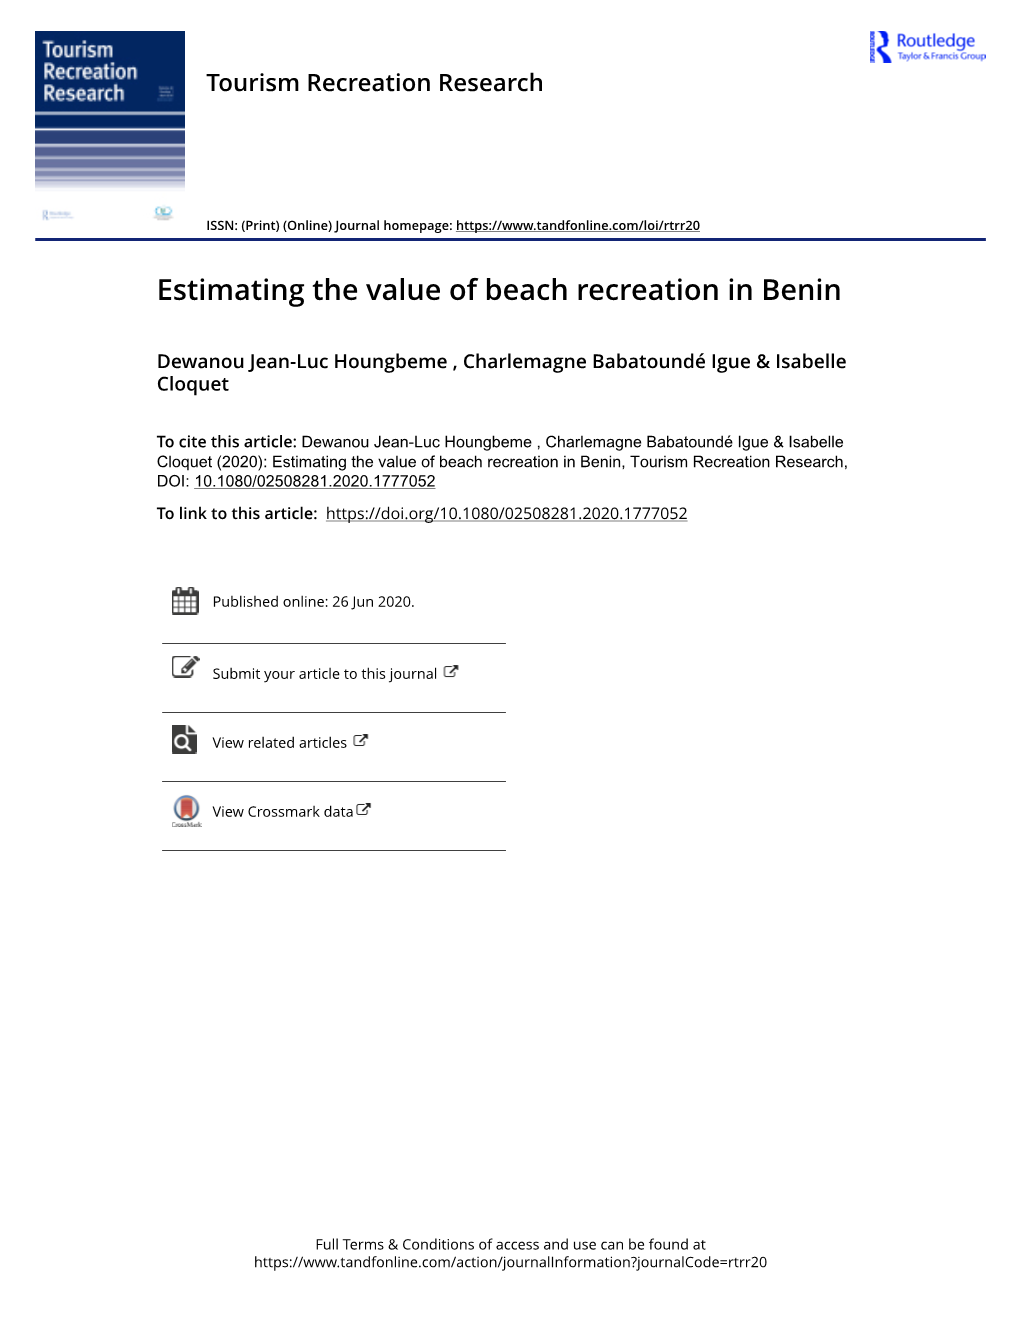 Estimating the Value of Beach Recreation in Benin